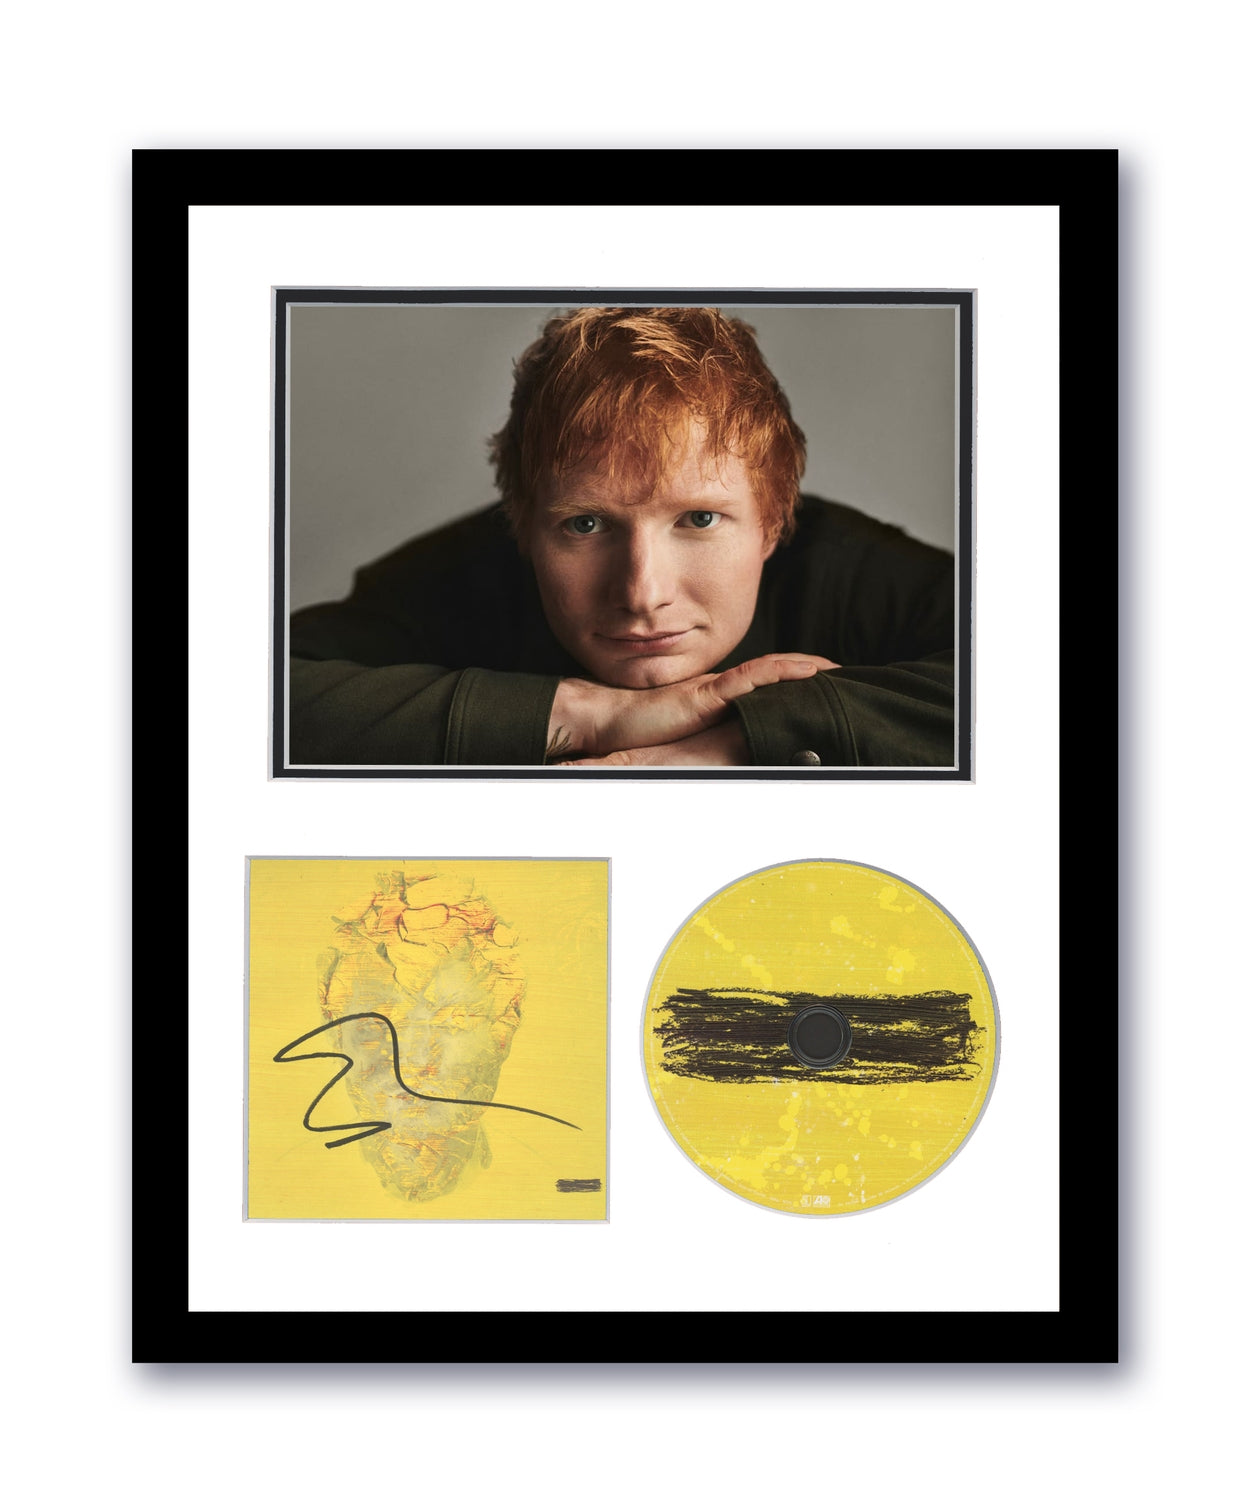 Ed Sheeran Signed 11x14 Framed Photo CD Subtract Autographed ACOA #5